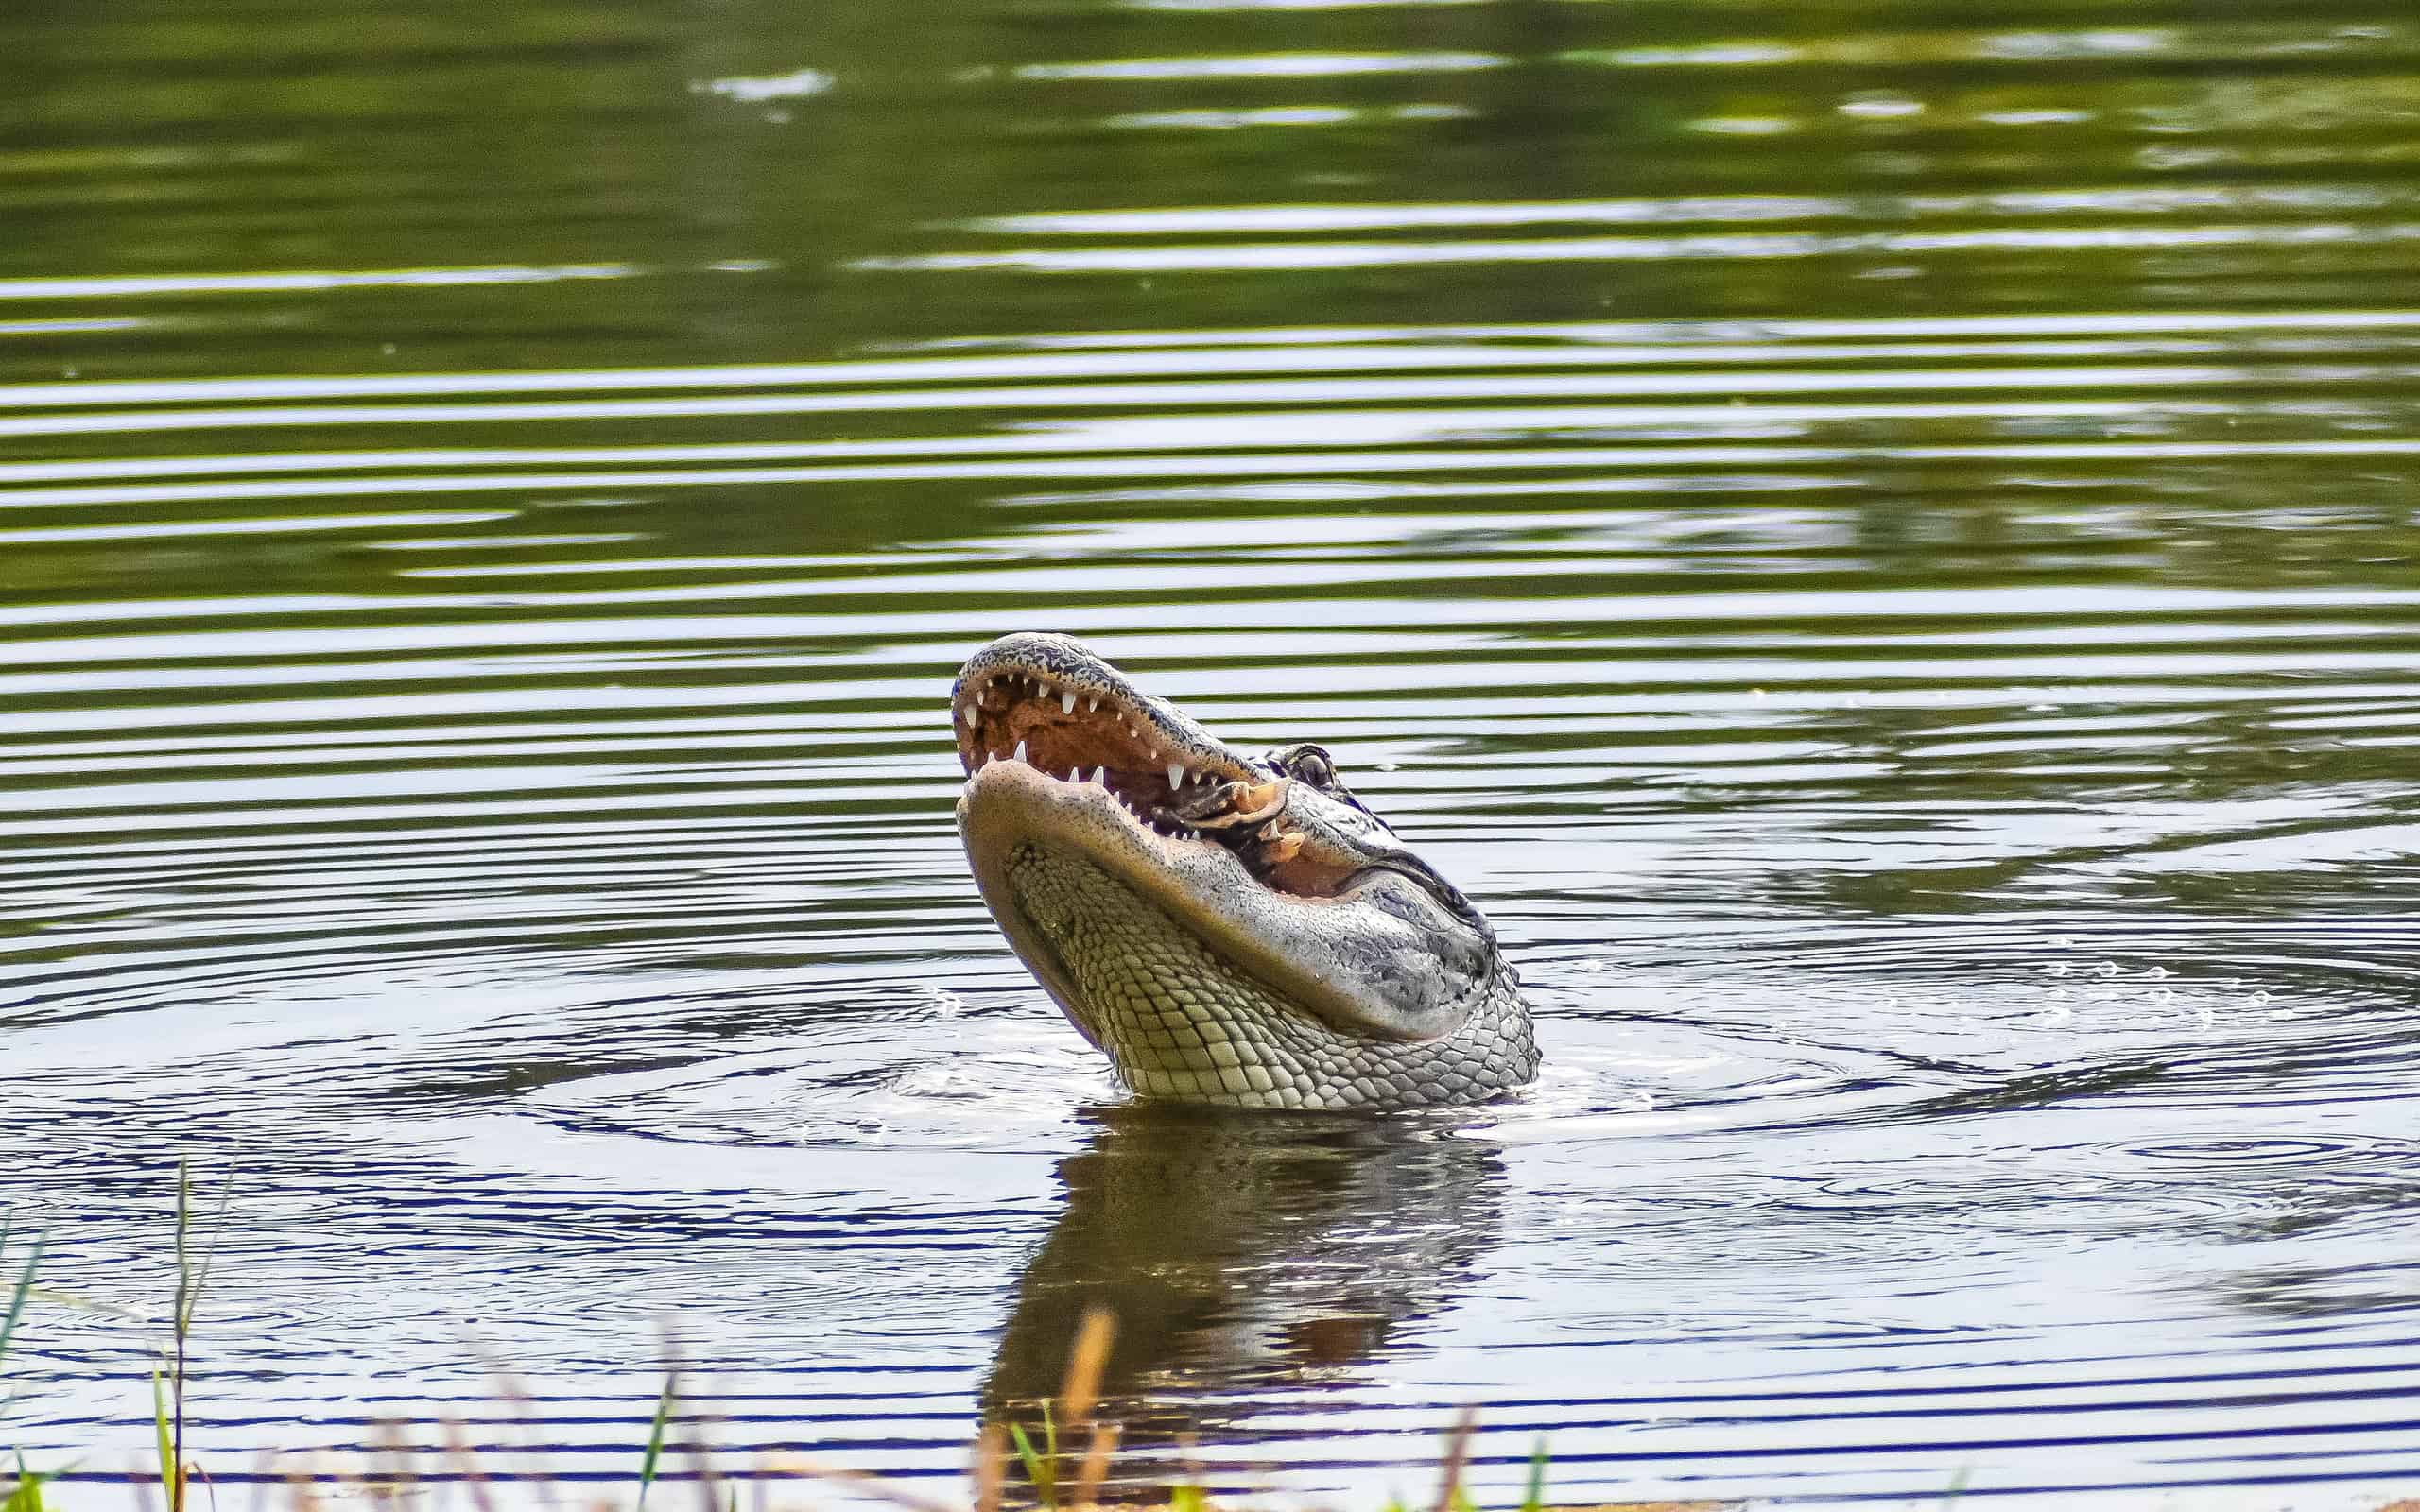 Un alligatore in Florida cattura una tartaruga e la mangia.